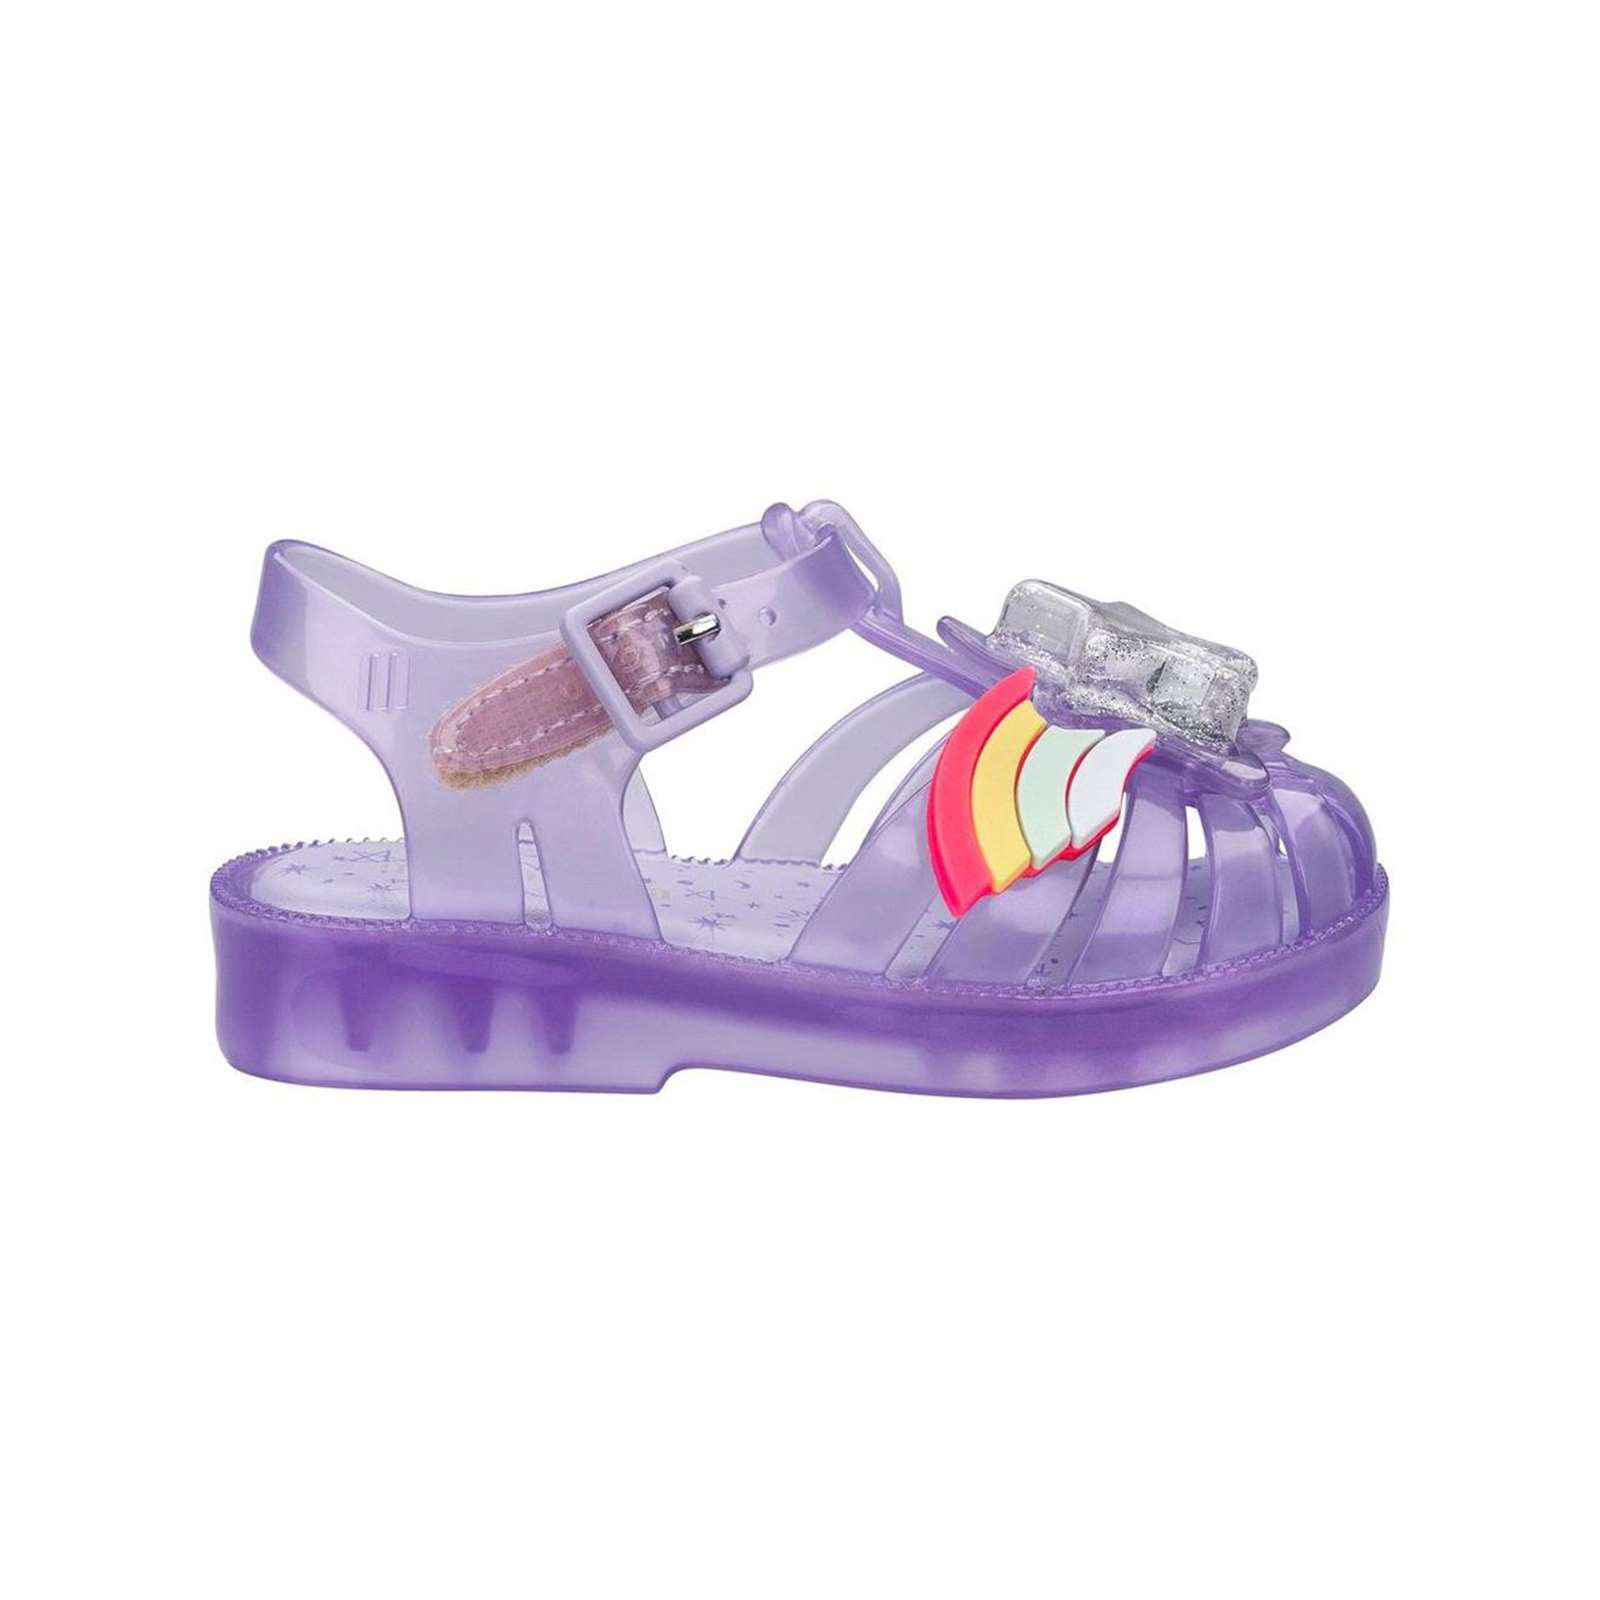 Charming Rainbow kids Girls Shoes Sandals Toddler Mini Melissa US Size 7-11 